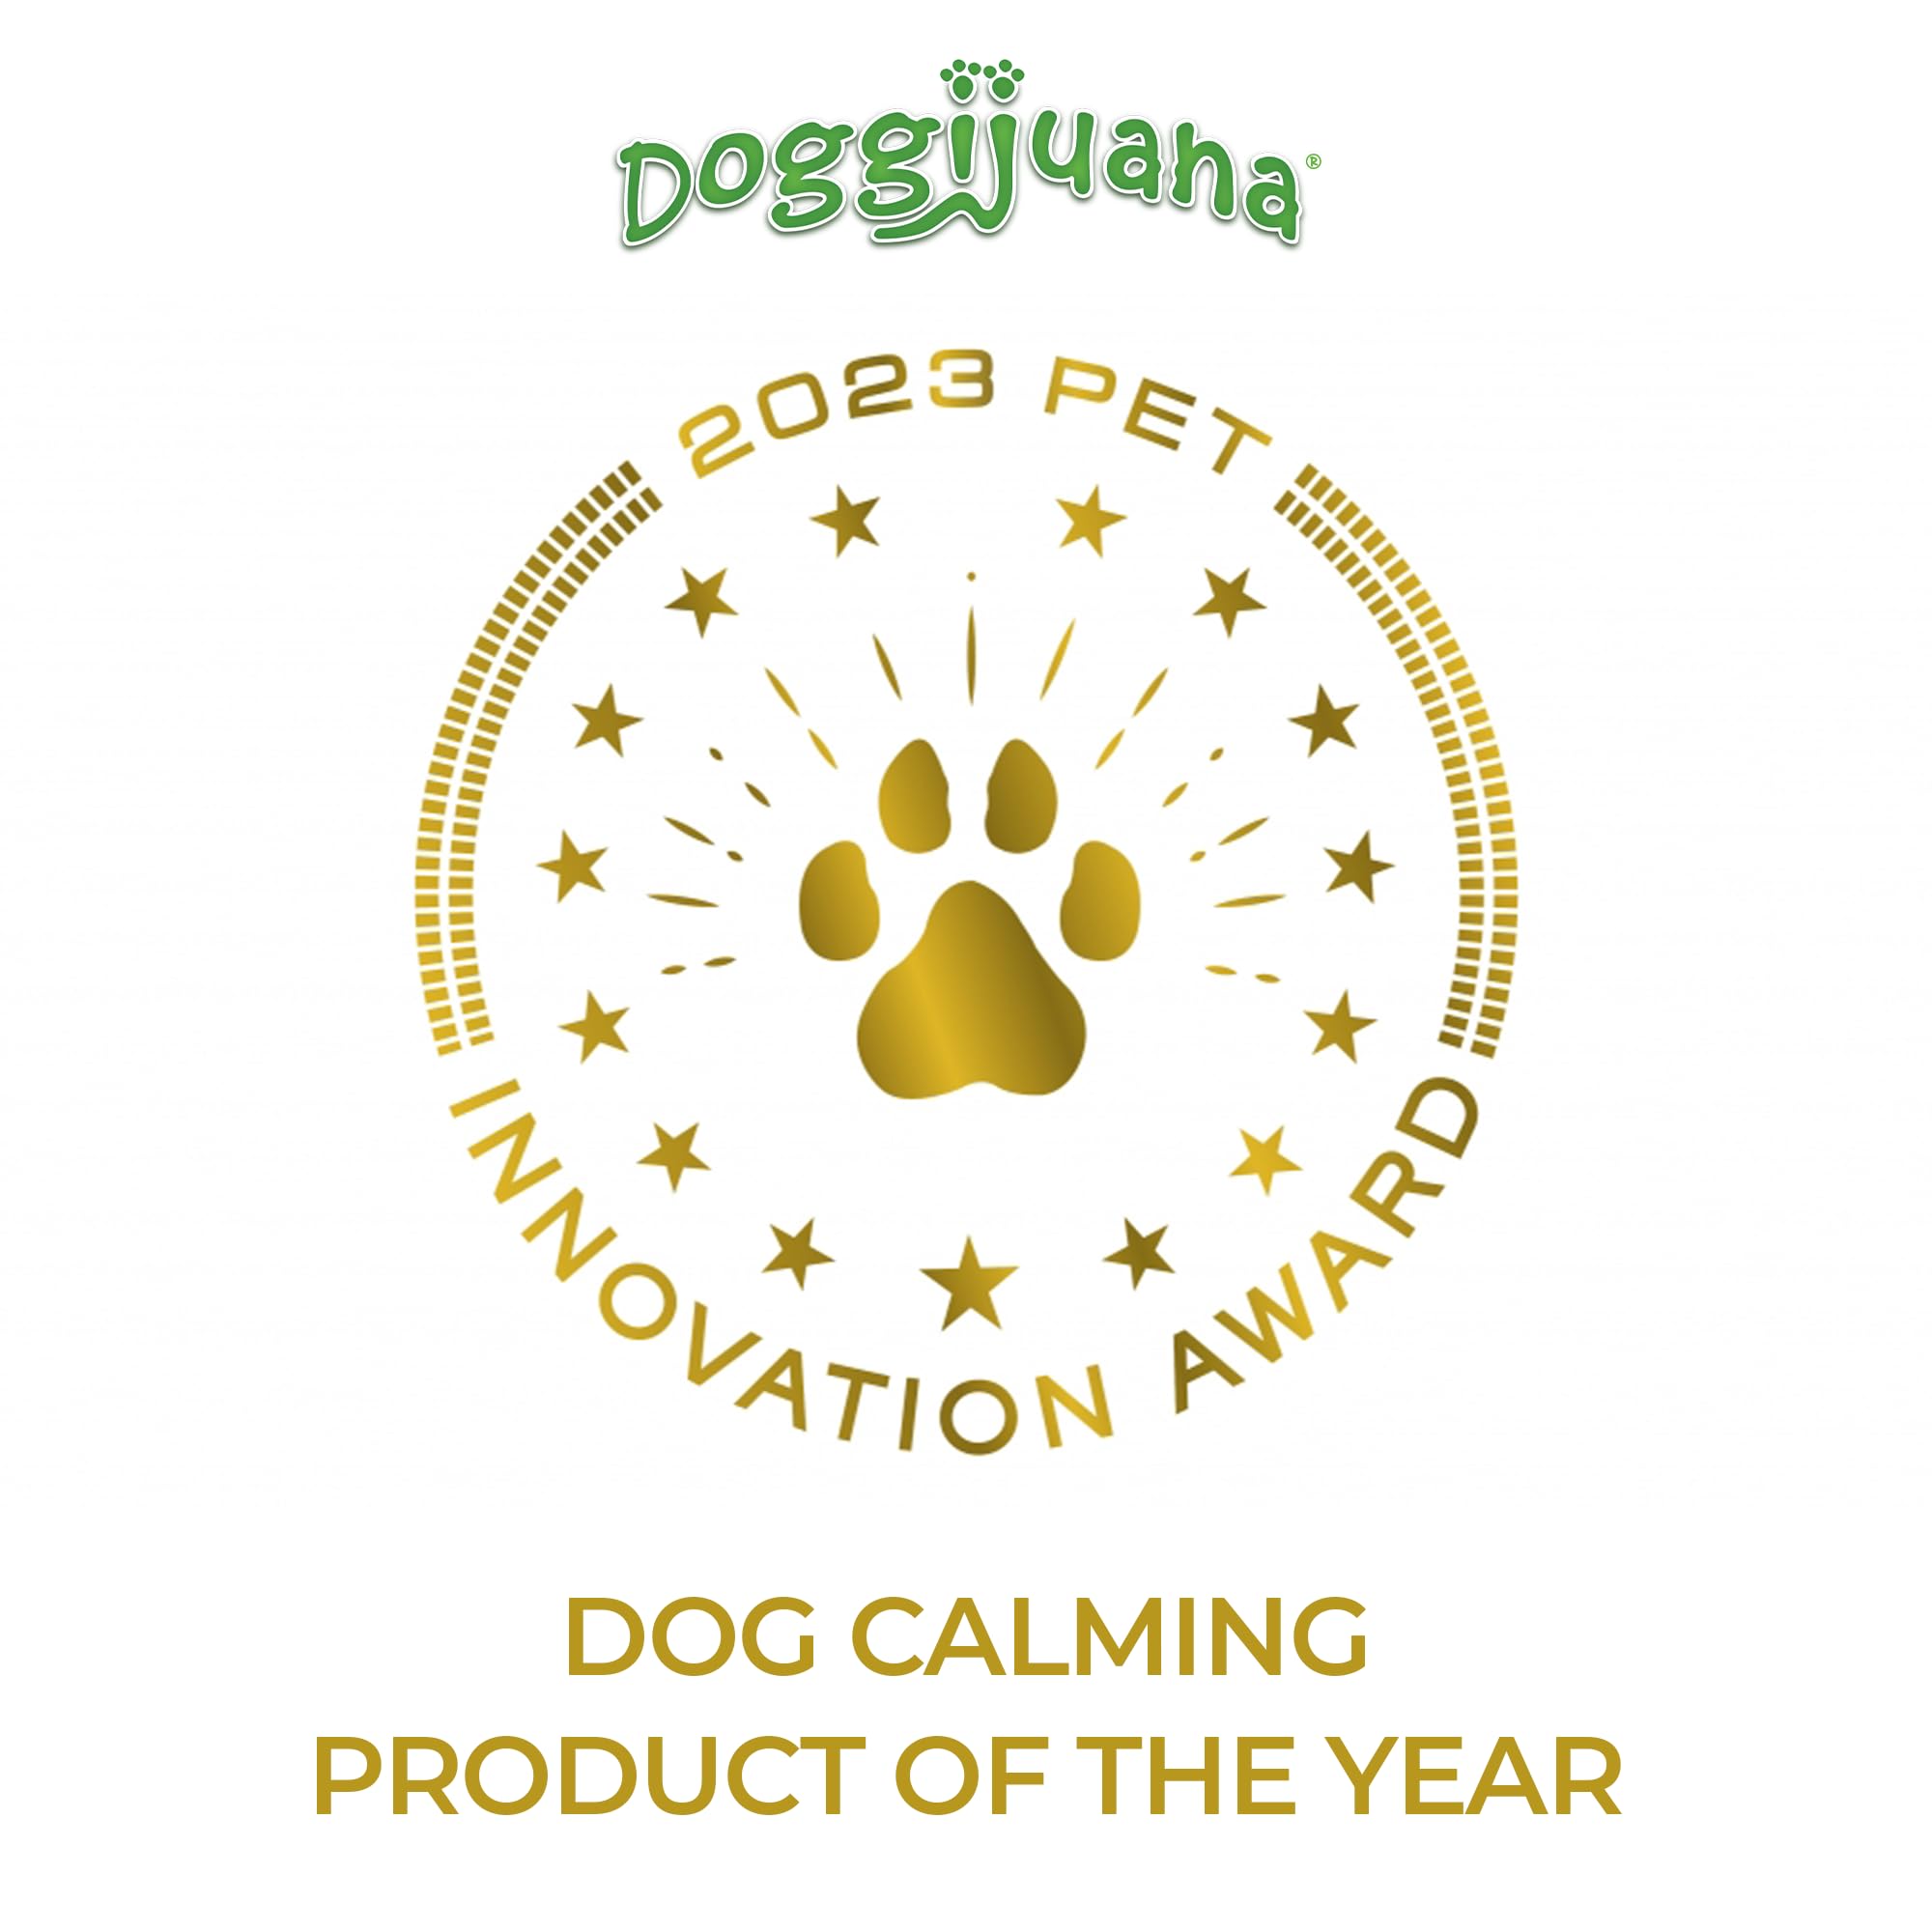 Doggijuana | Juananip™ Refill | Premium Organic Ground Catnip for Dogs | All Natural | Grown in The USA (Juananip Jar)